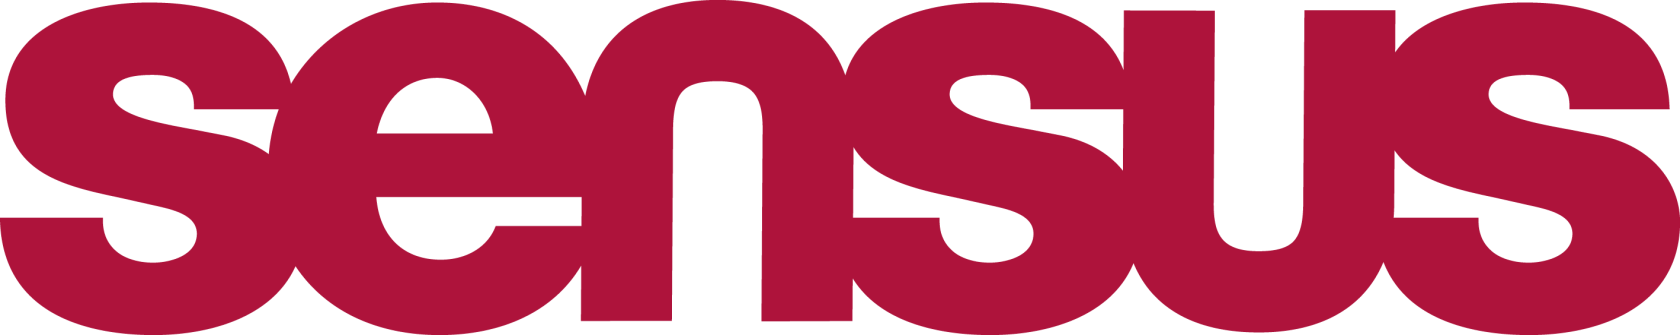 Studieförbundet Sensus logotyp.